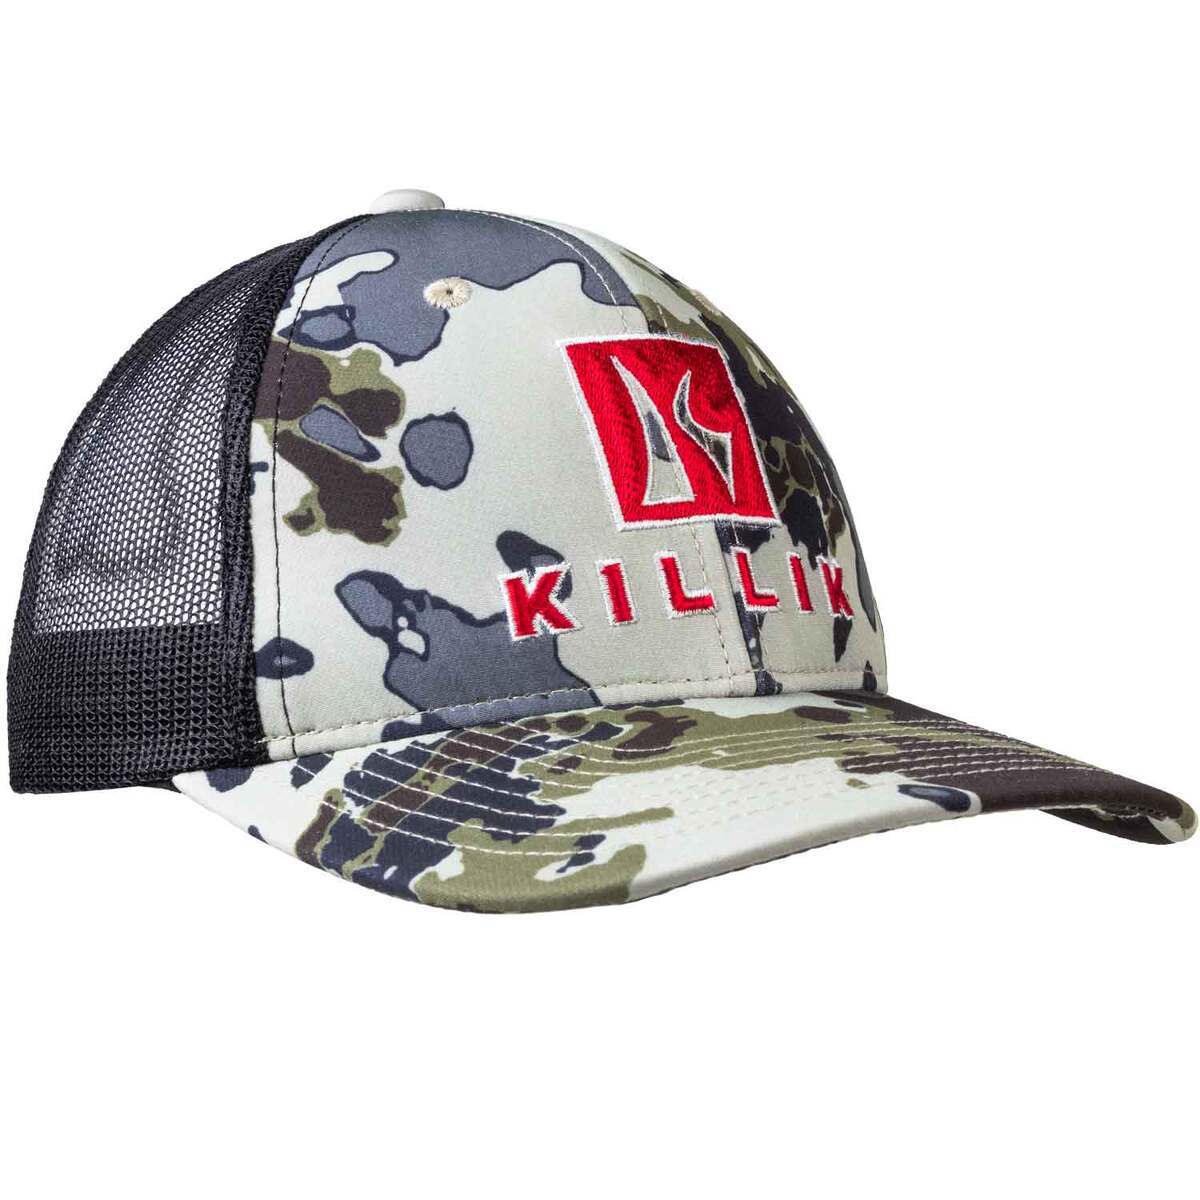 Killik Big Sky Trucker Hat - Black One Size Fits Most by Sportsman's Warehouse